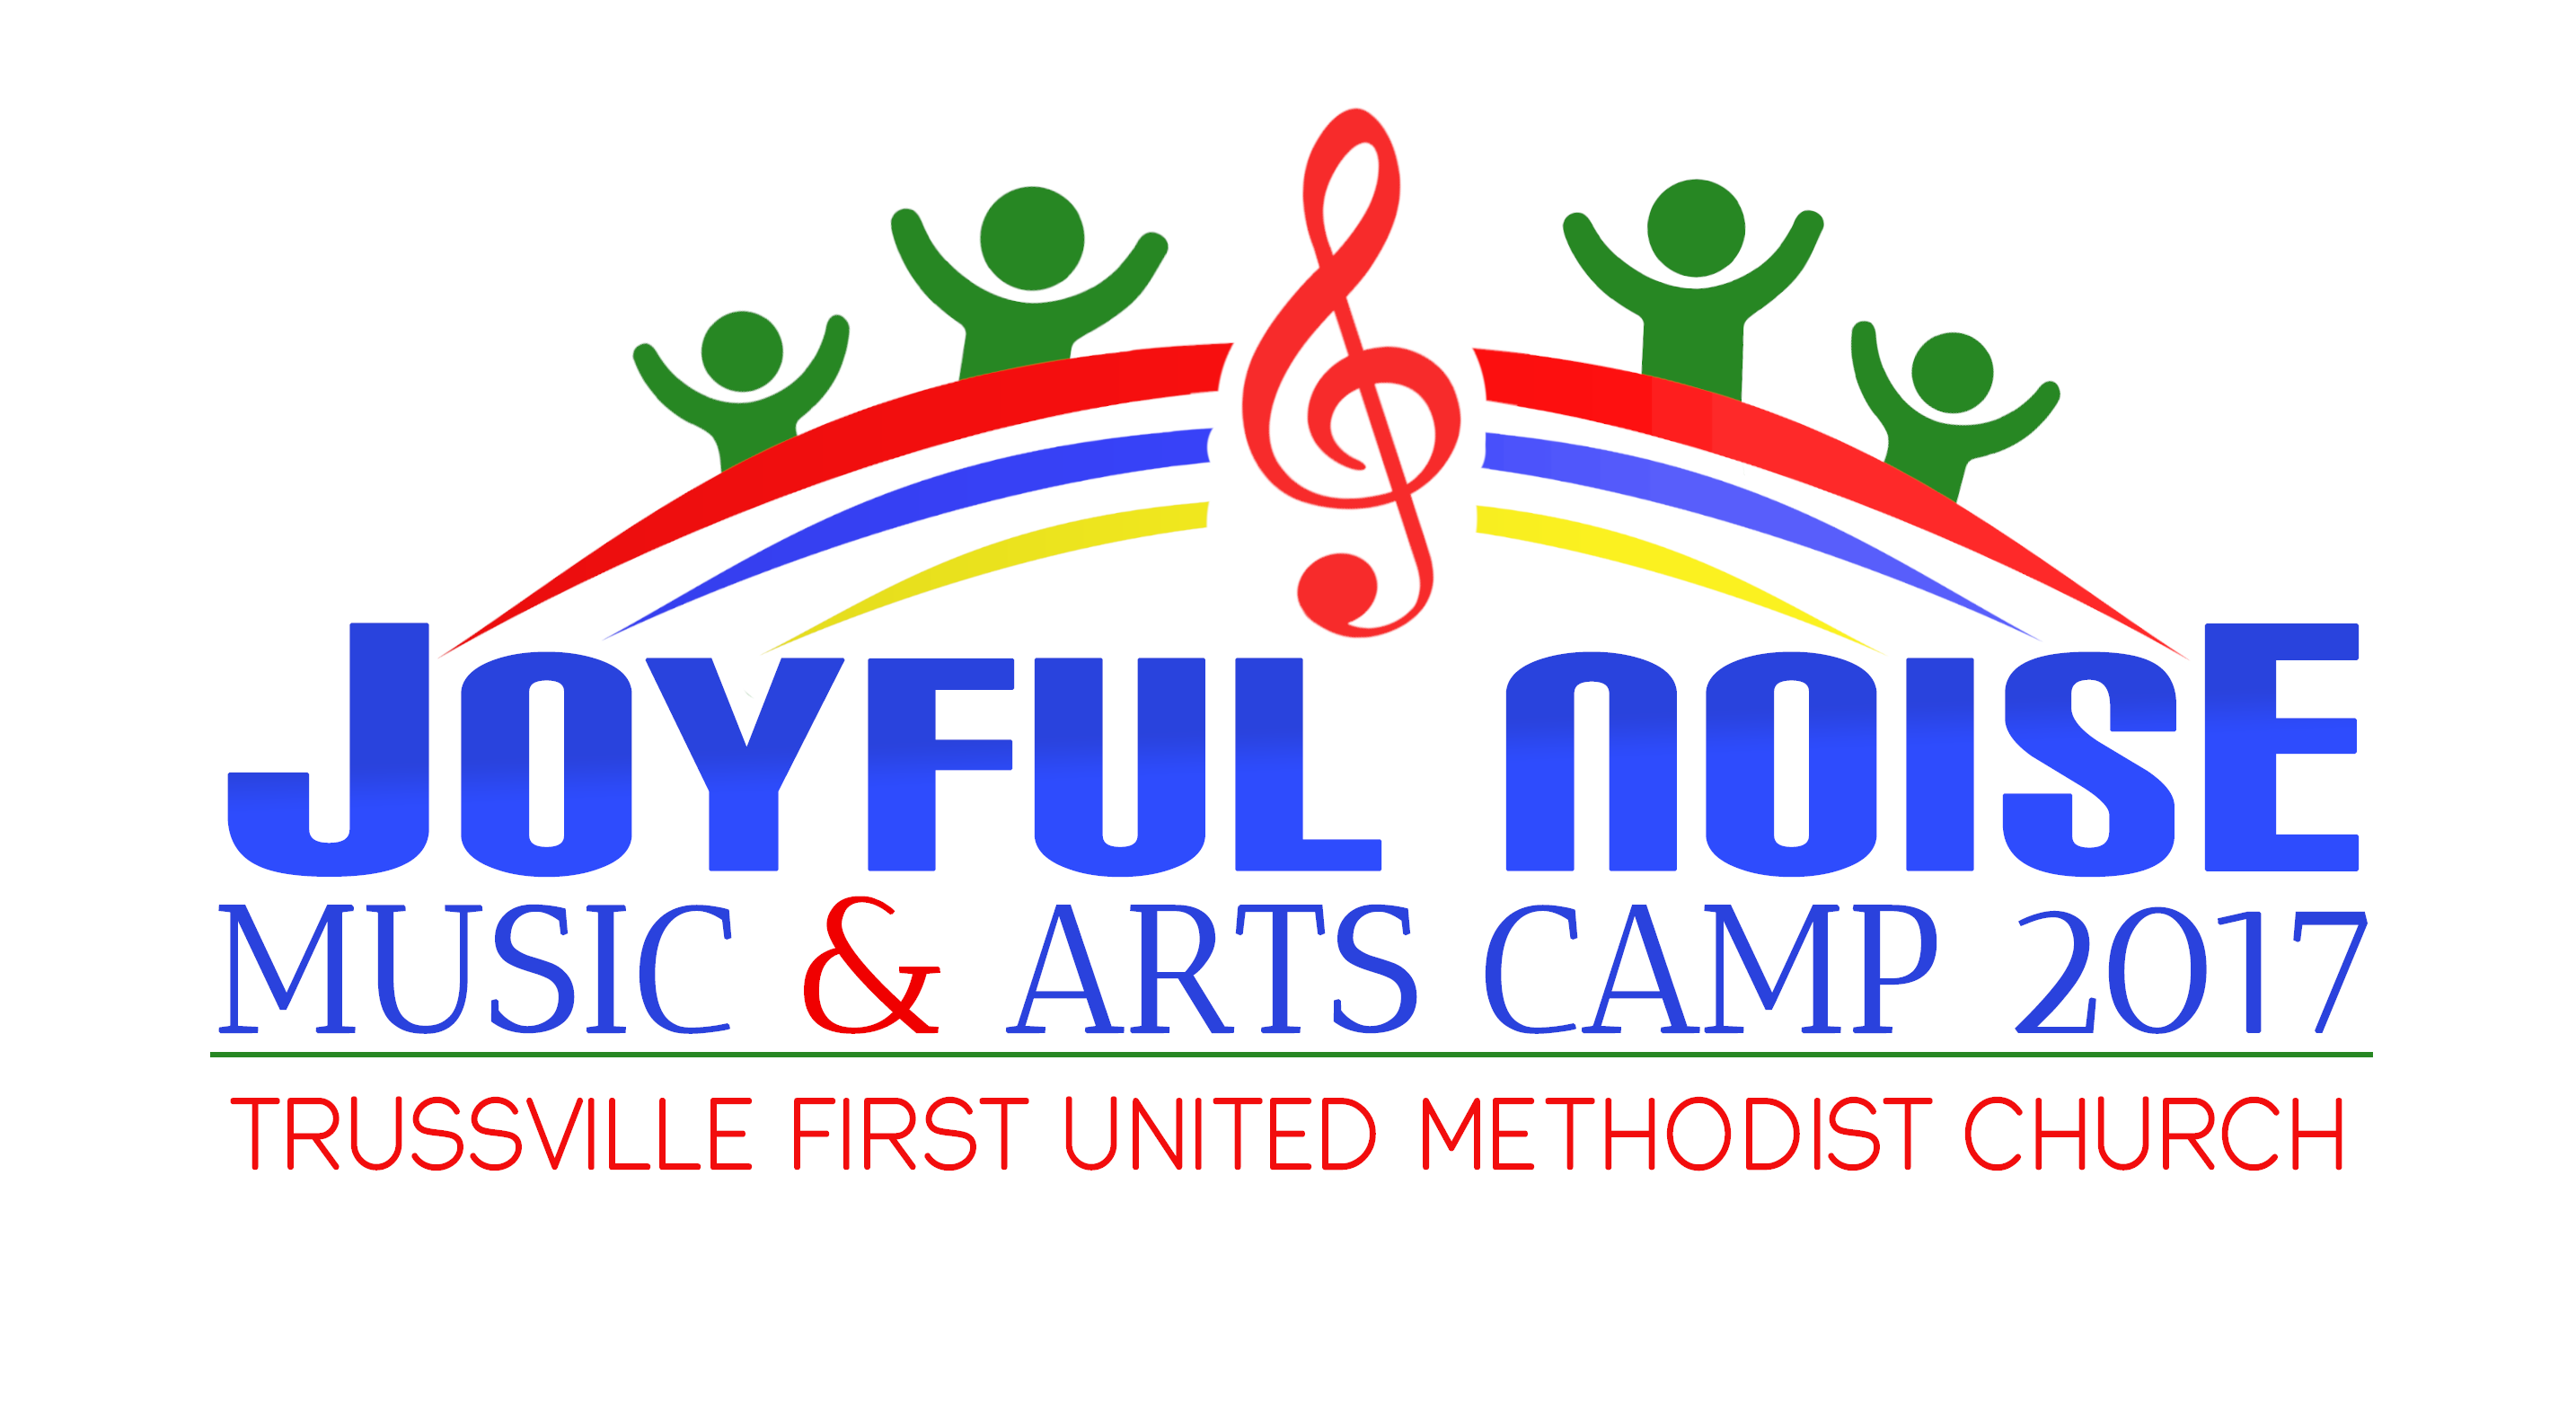 Make A Joyful Noise Music & Arts Camp